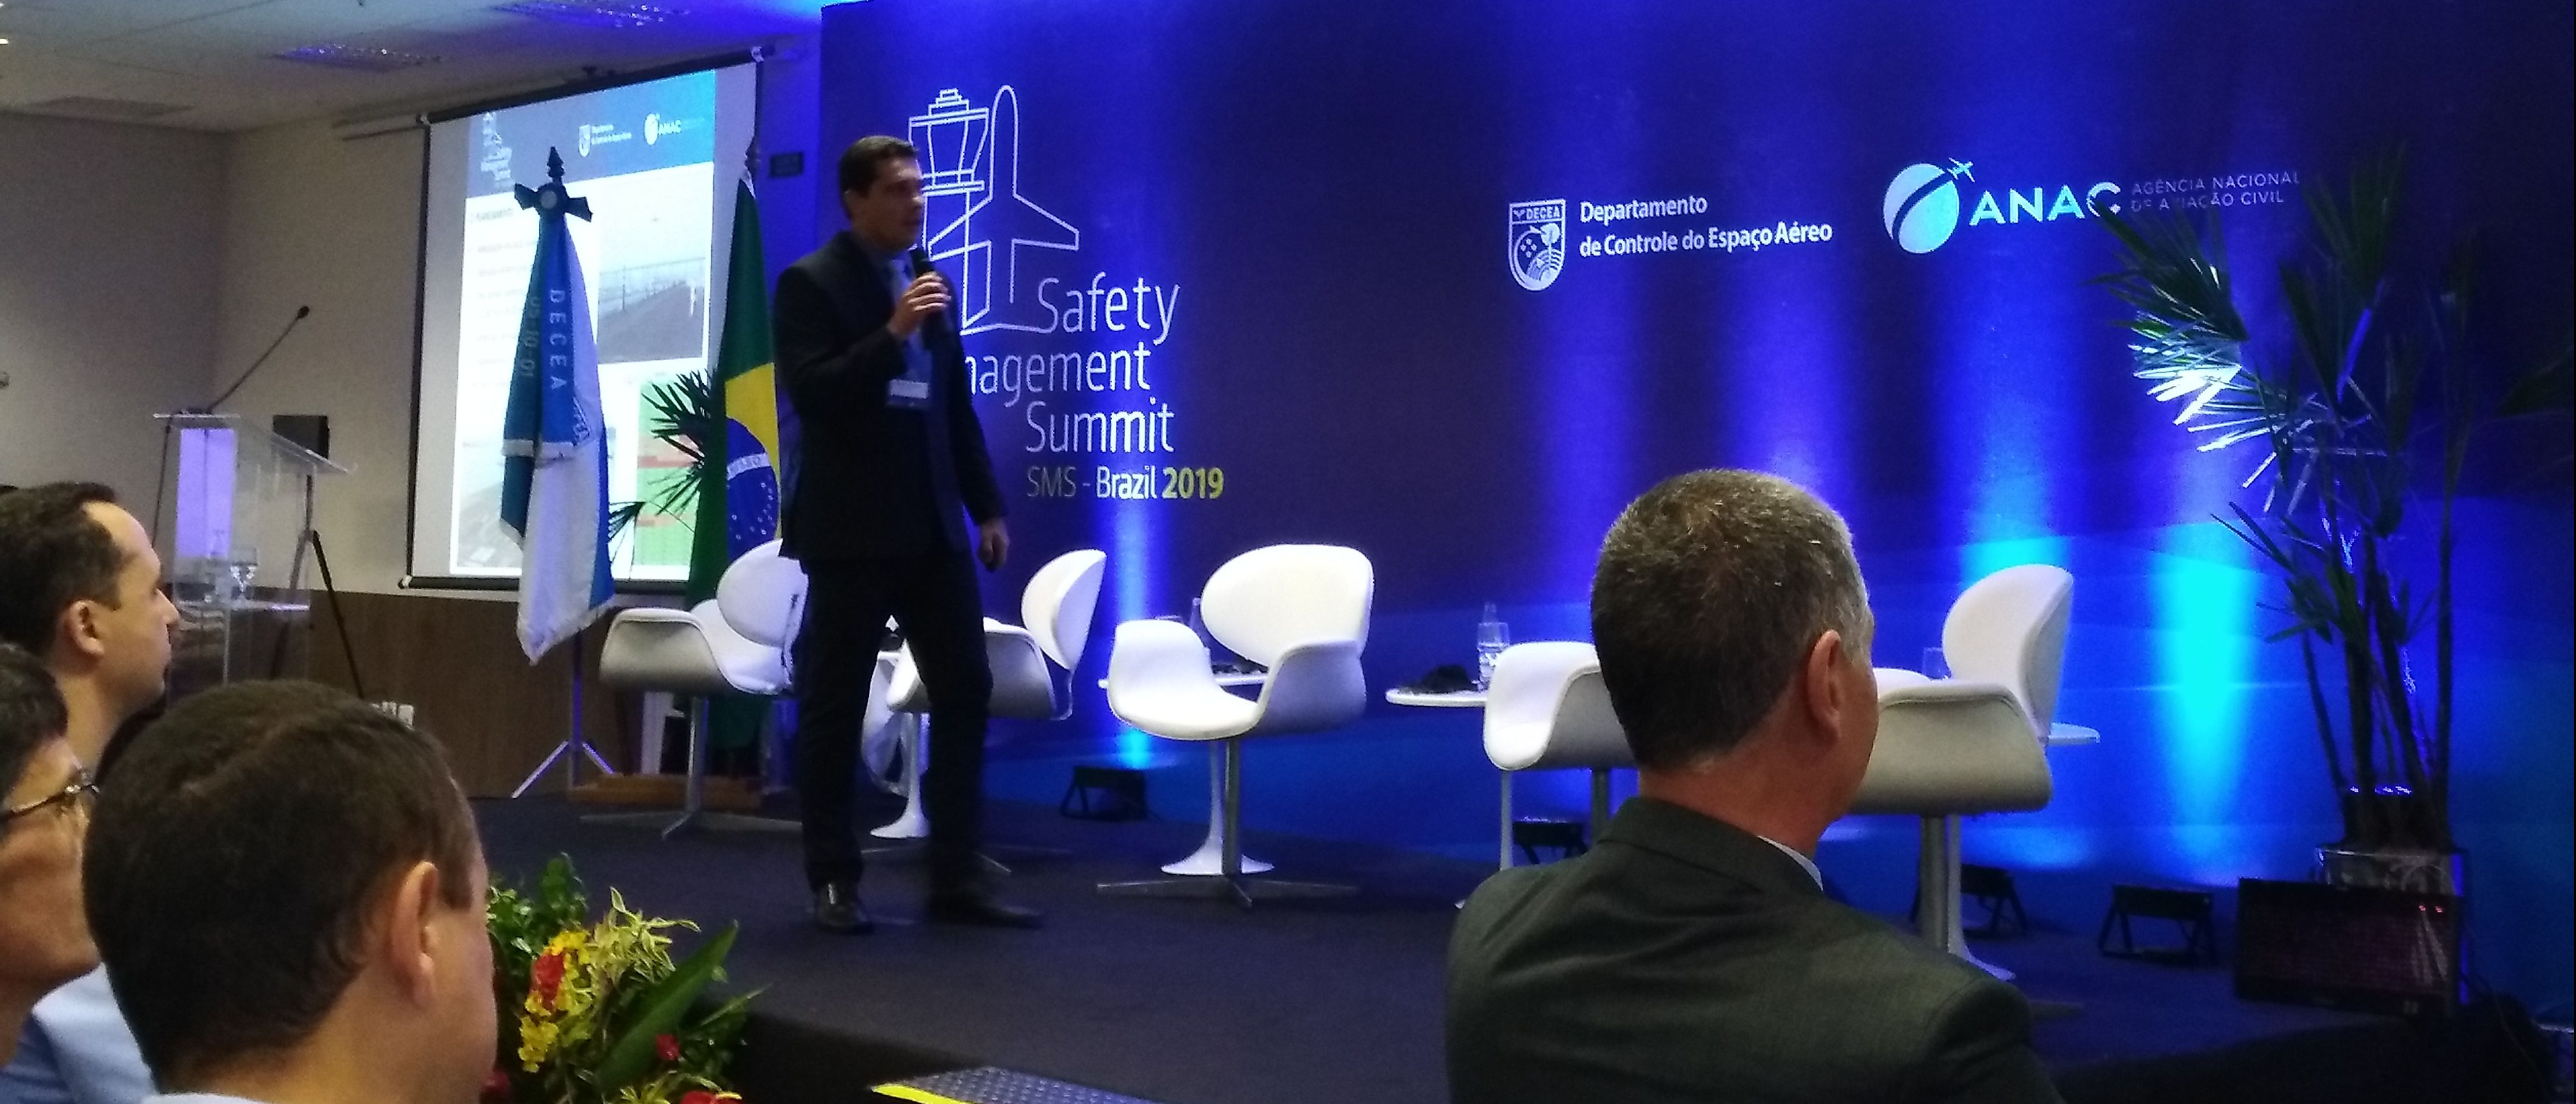 Exposición durante el Safety Management Summit – SMS Brazil 2019